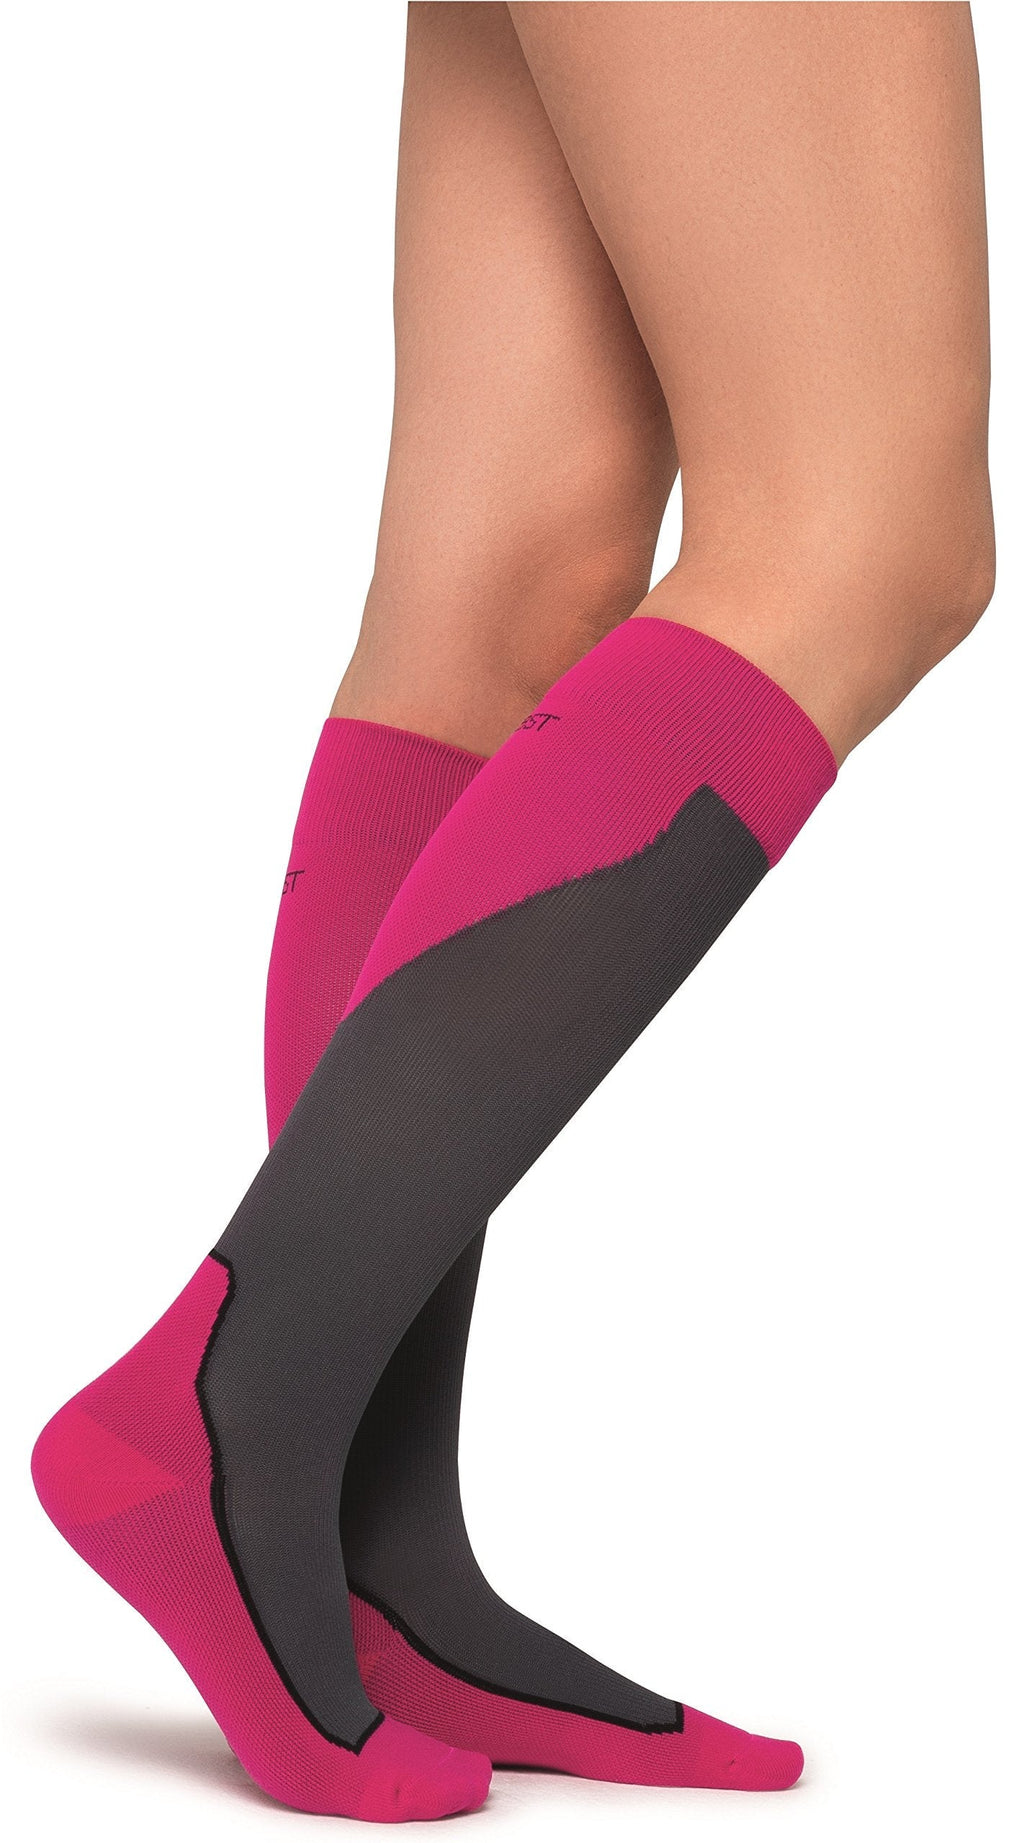 [Australia] - JOBST Sport Knee High 15-20 mmHg Compression Socks, Pink/Grey, Medium 